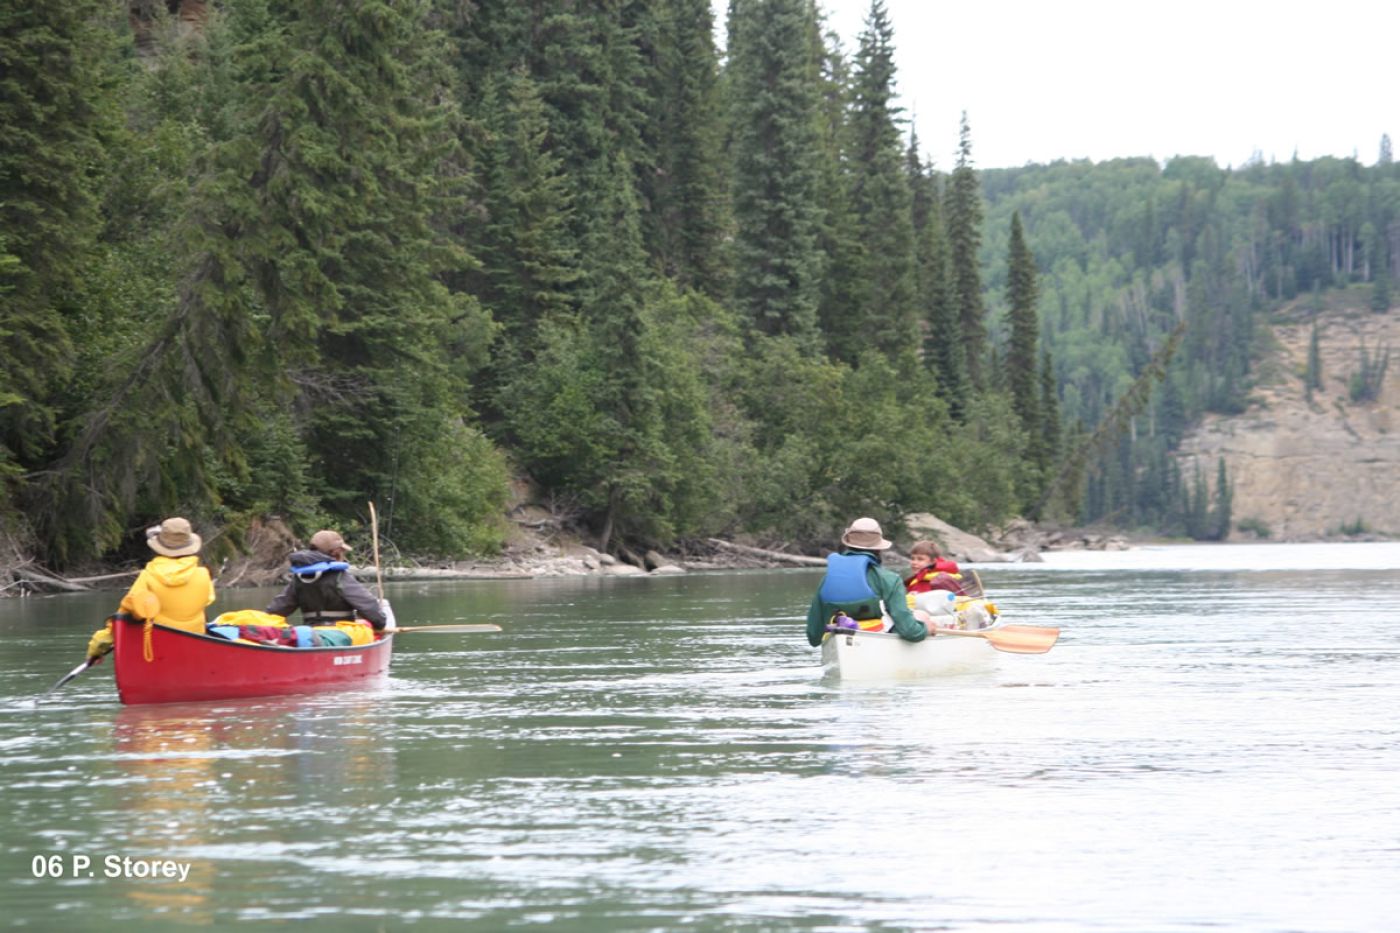 two canoes on canoe trip in alberta, canada | zwei kanus beim einer kanutour in alberta, kanada